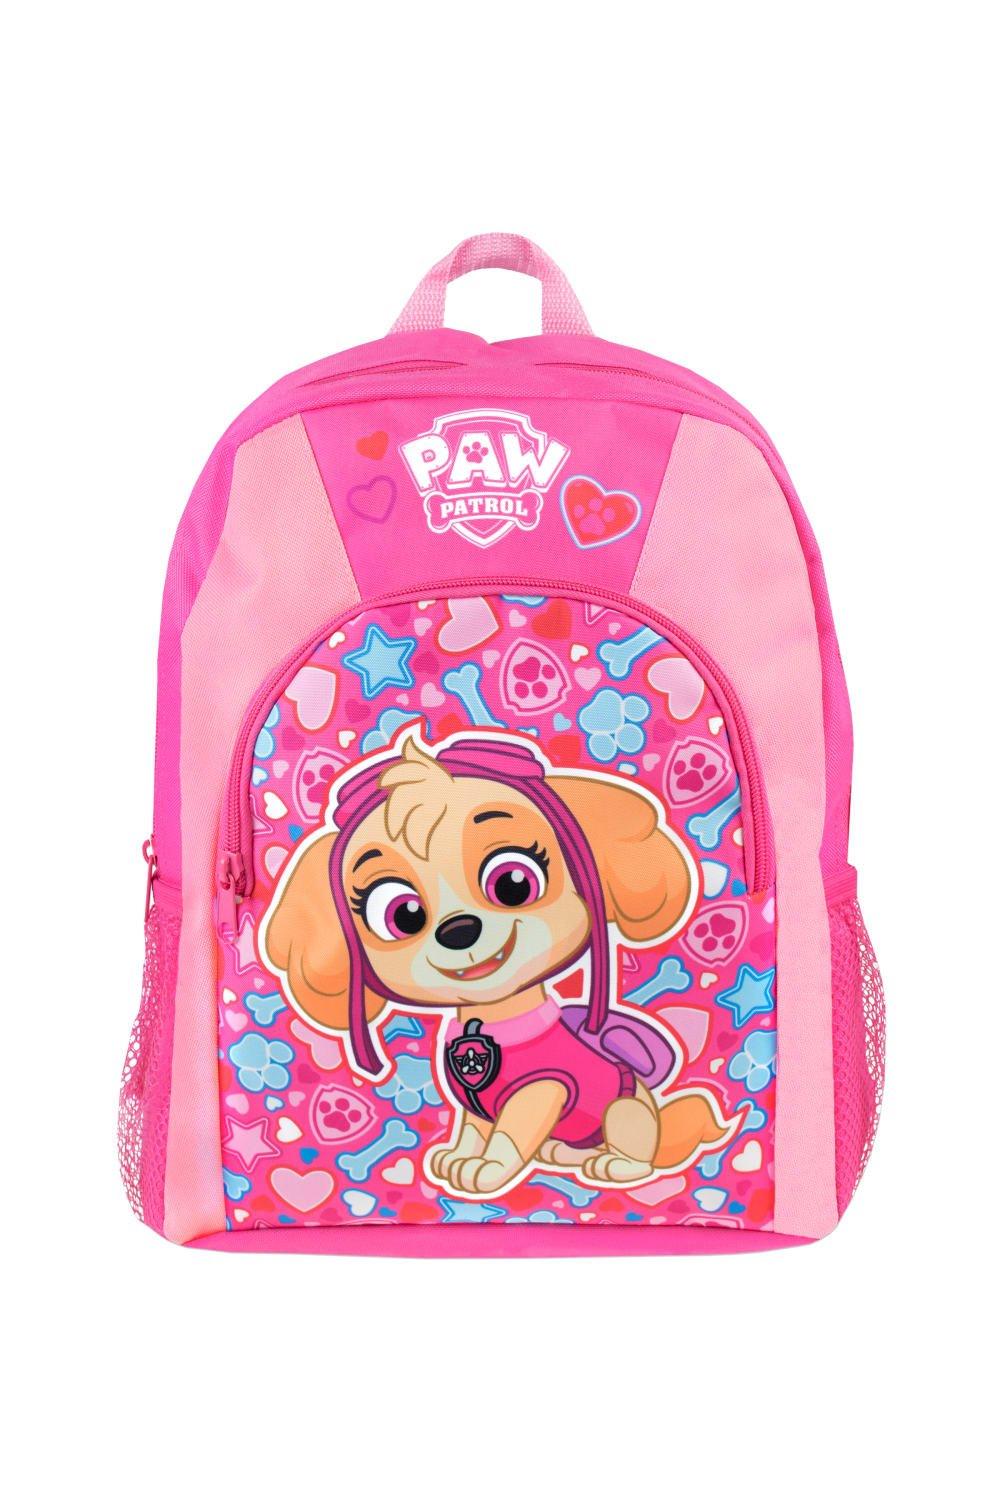 Детский рюкзак Skye Paw Patrol, розовый толстовка скай paw patrol мультиколор